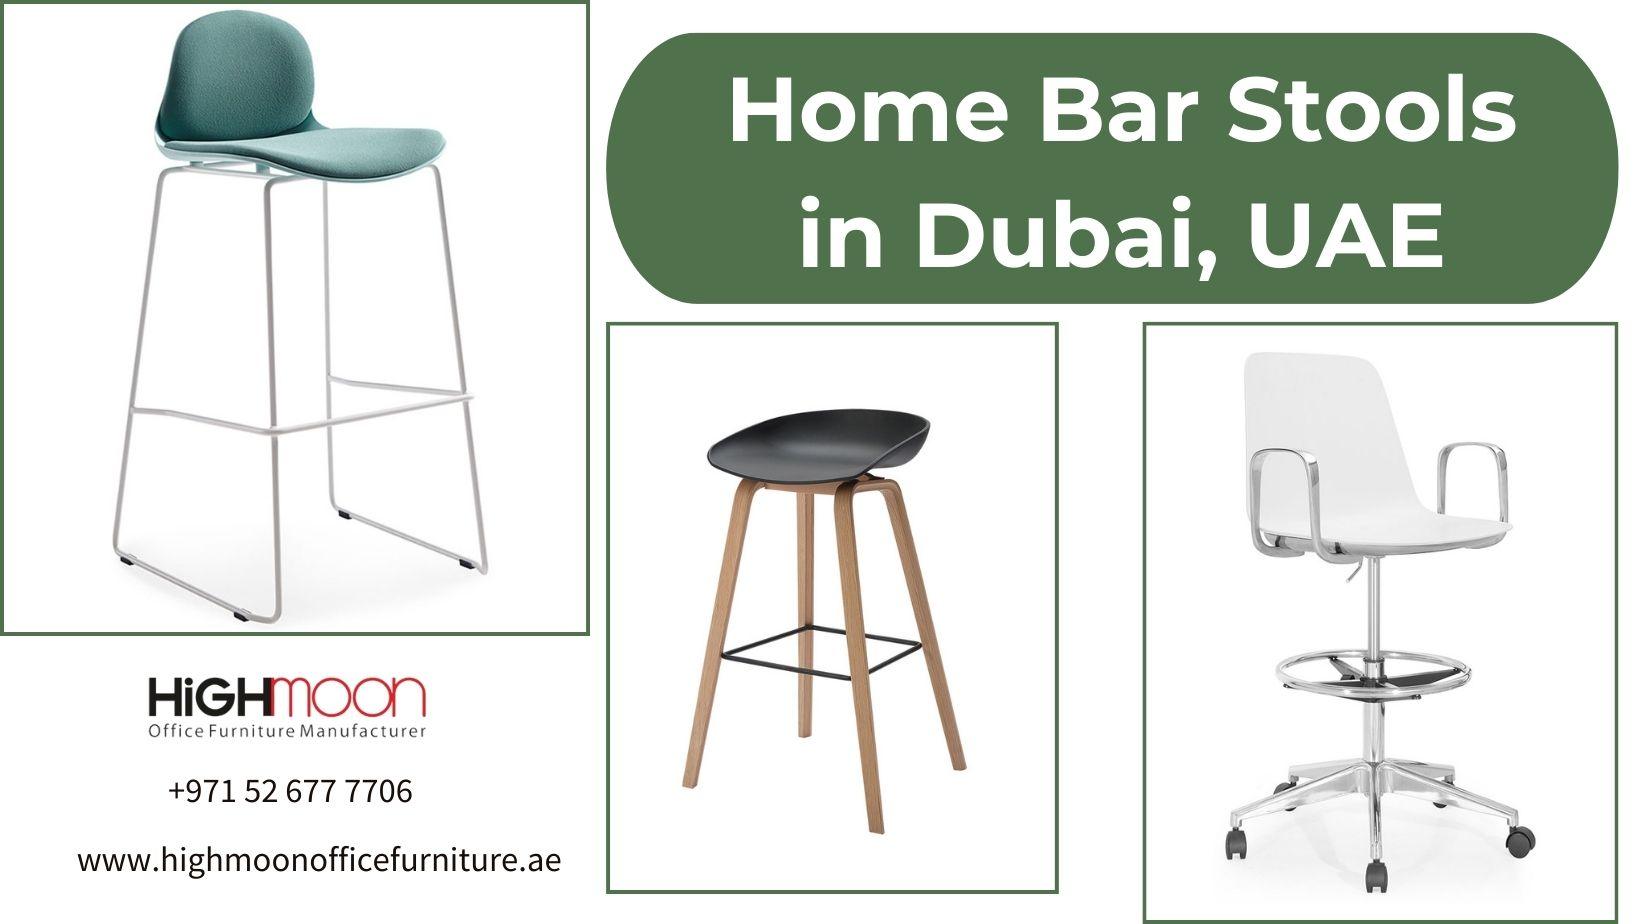 Home Bar Stools in Dubai, UAE